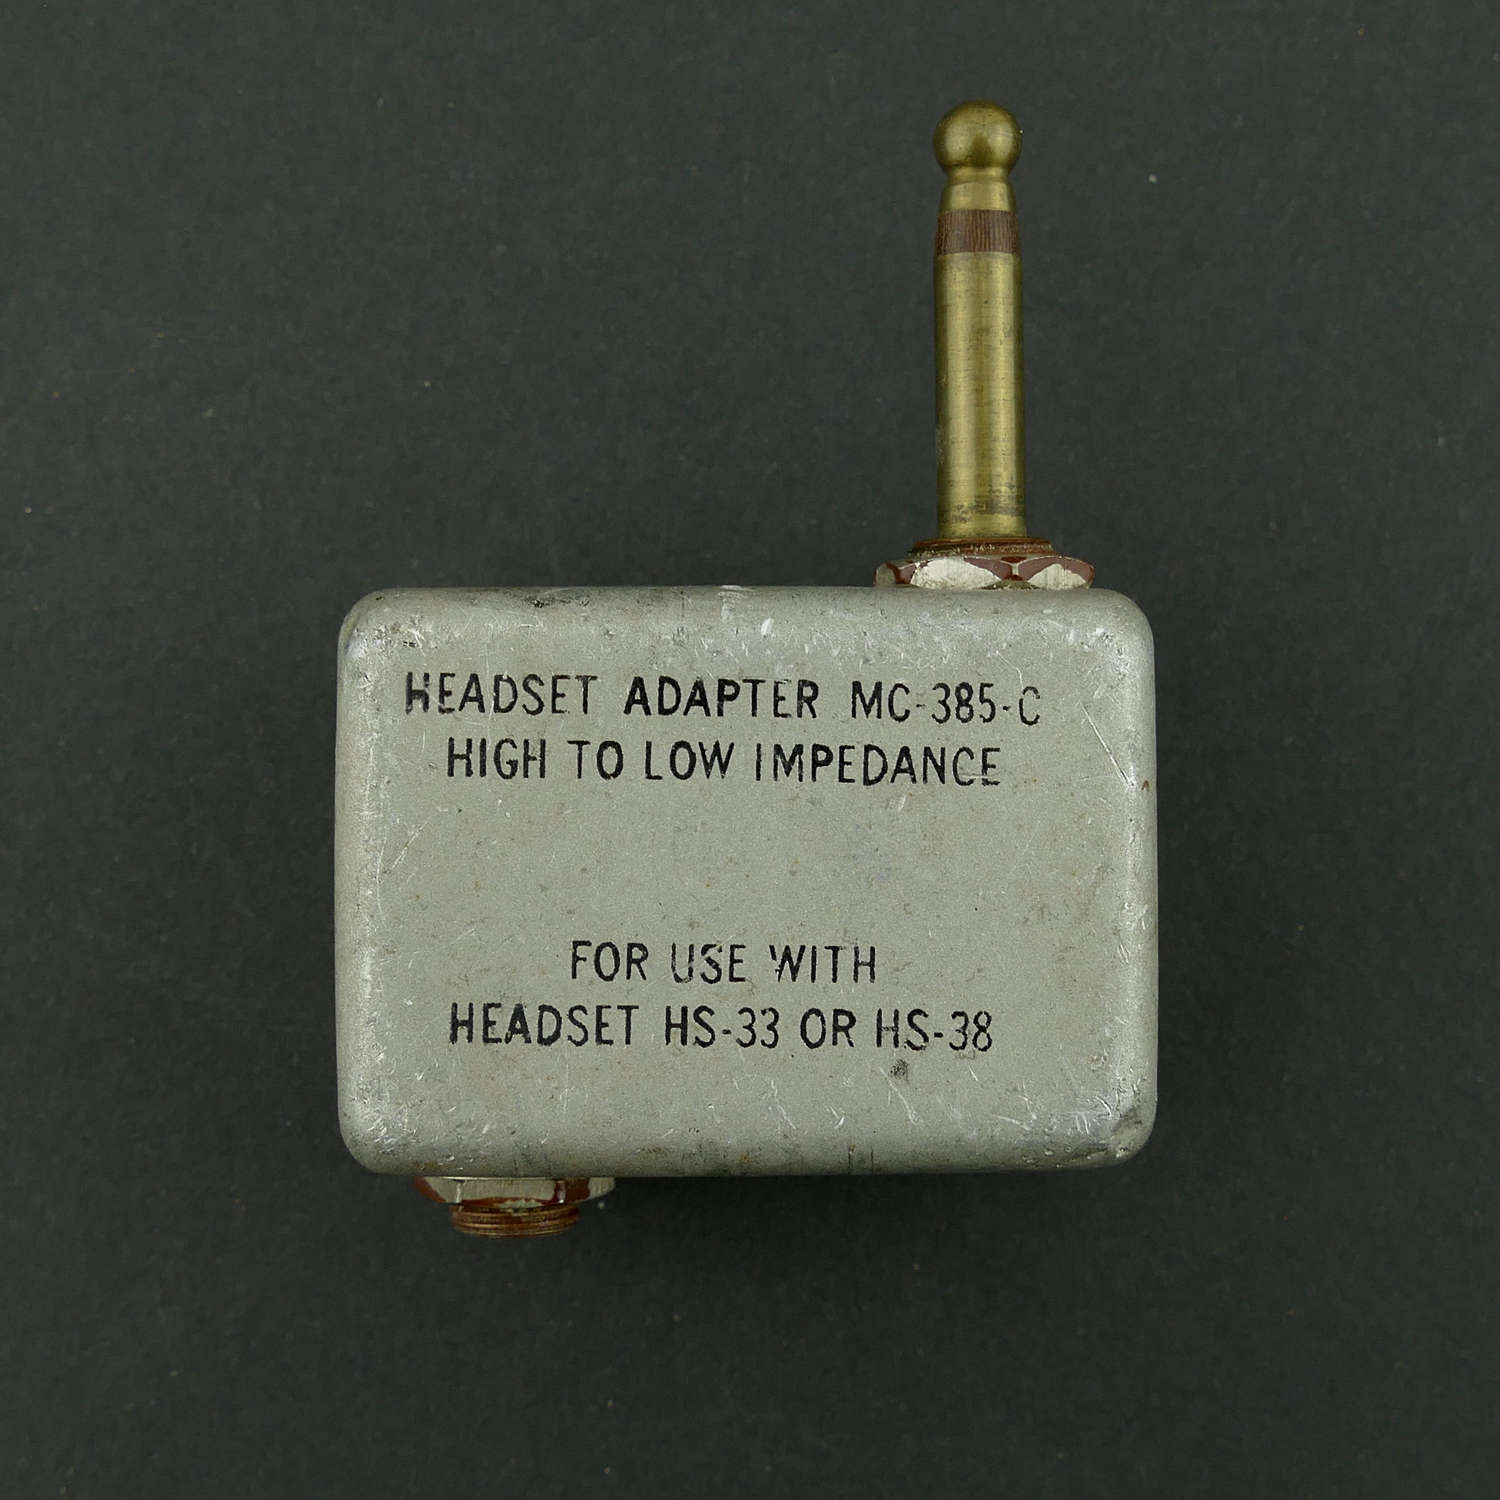 USAAF headset adaptor, type MC-385